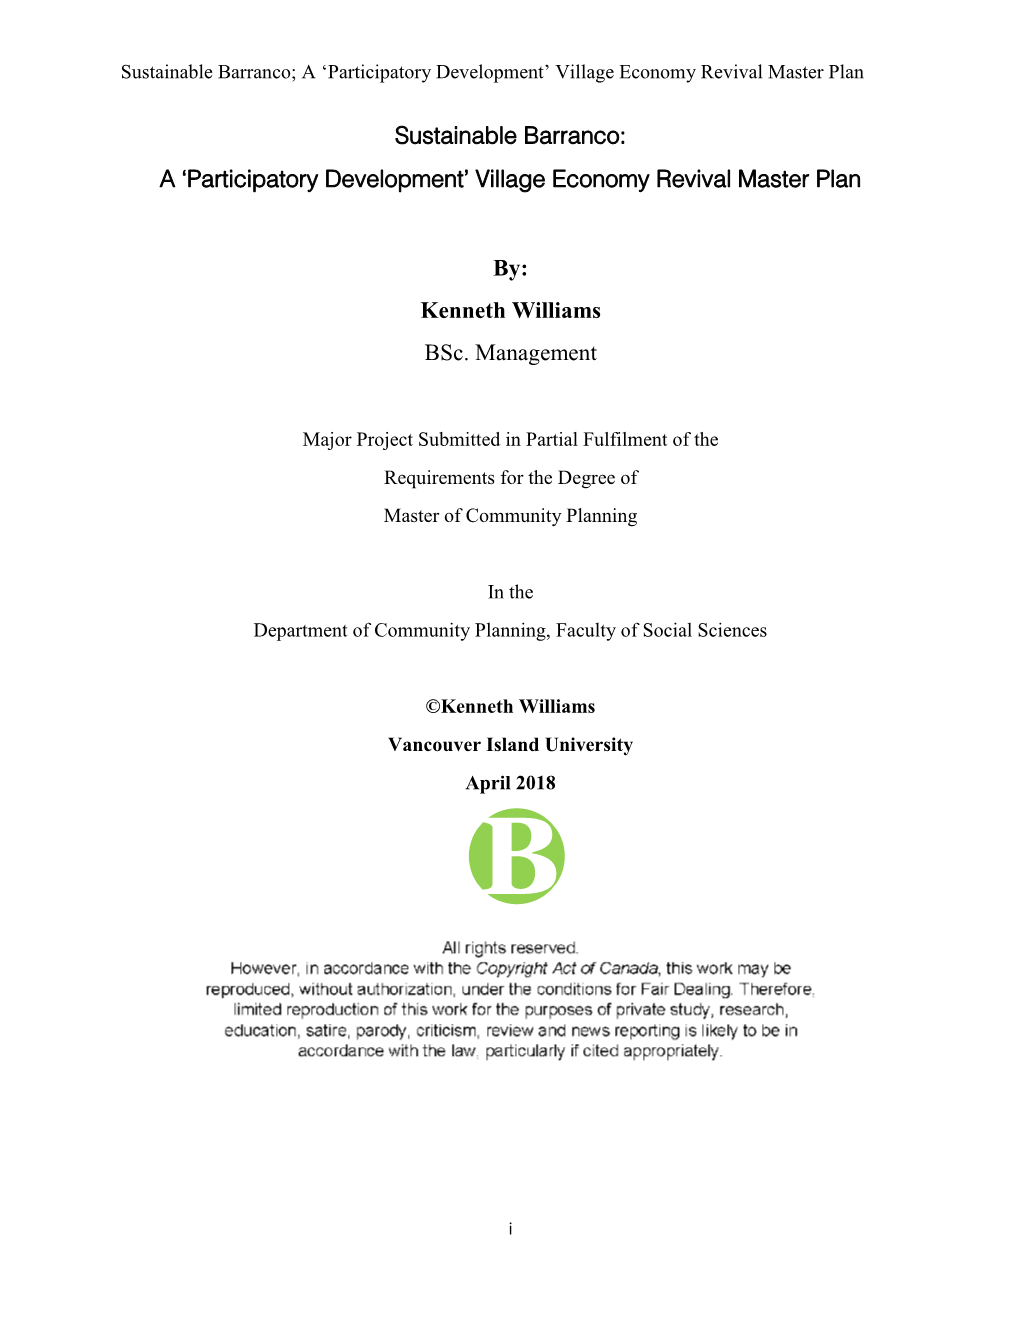 Sustainable Barranco; a ‘Participatory Development’ Village Economy Revival Master Plan